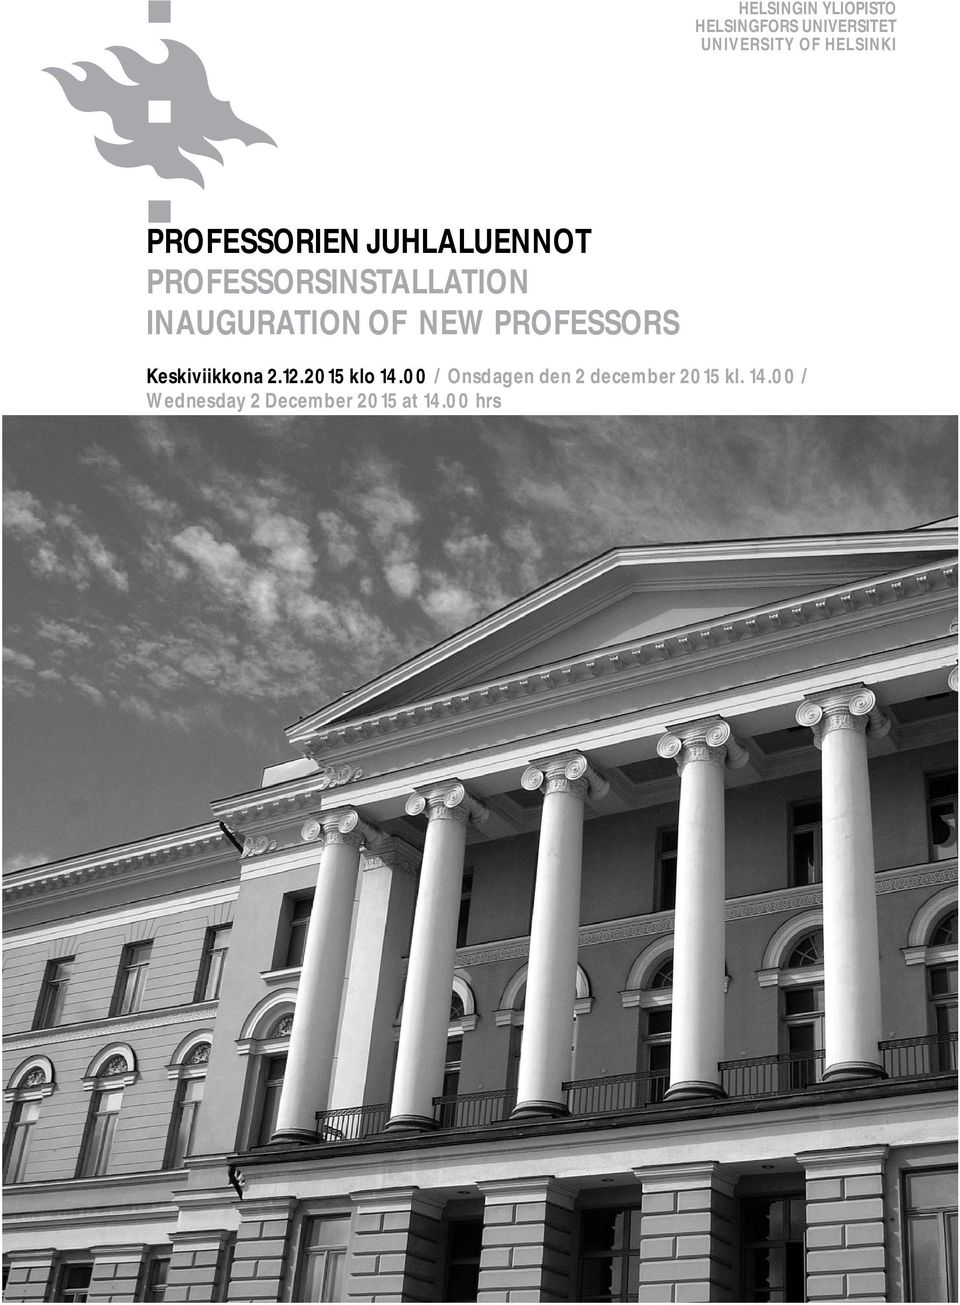 INAUGURATION OF NEW PROFESSORS Keskiviikkona 2.12.2015 klo 14.